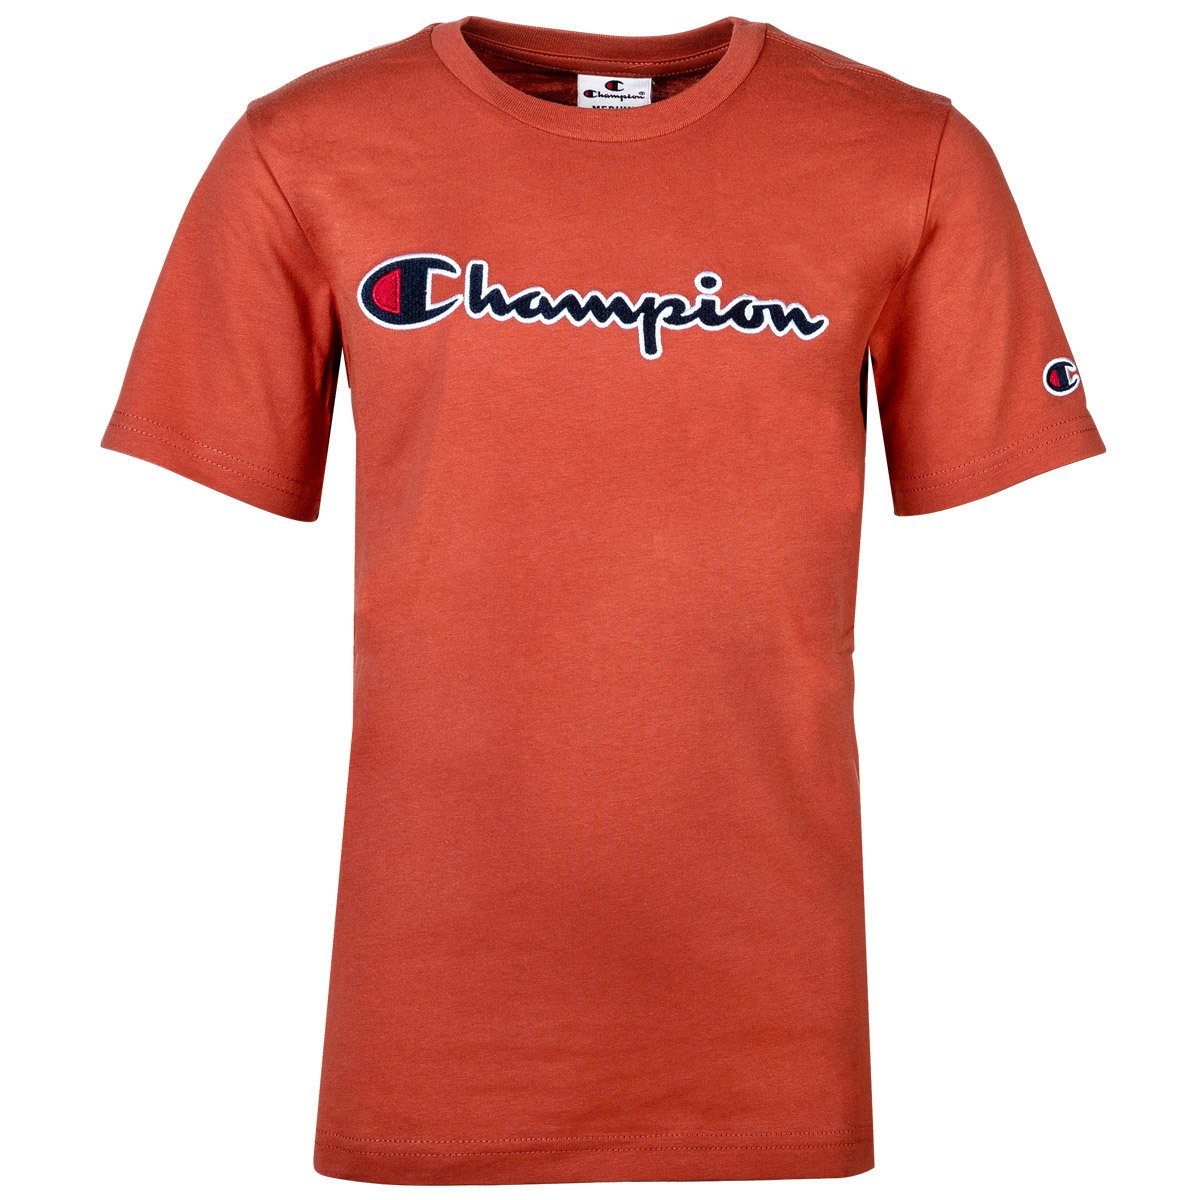 Champion T-Shirt Kinder Rot - Unisex Crewneck, T-Shirt Rundhals